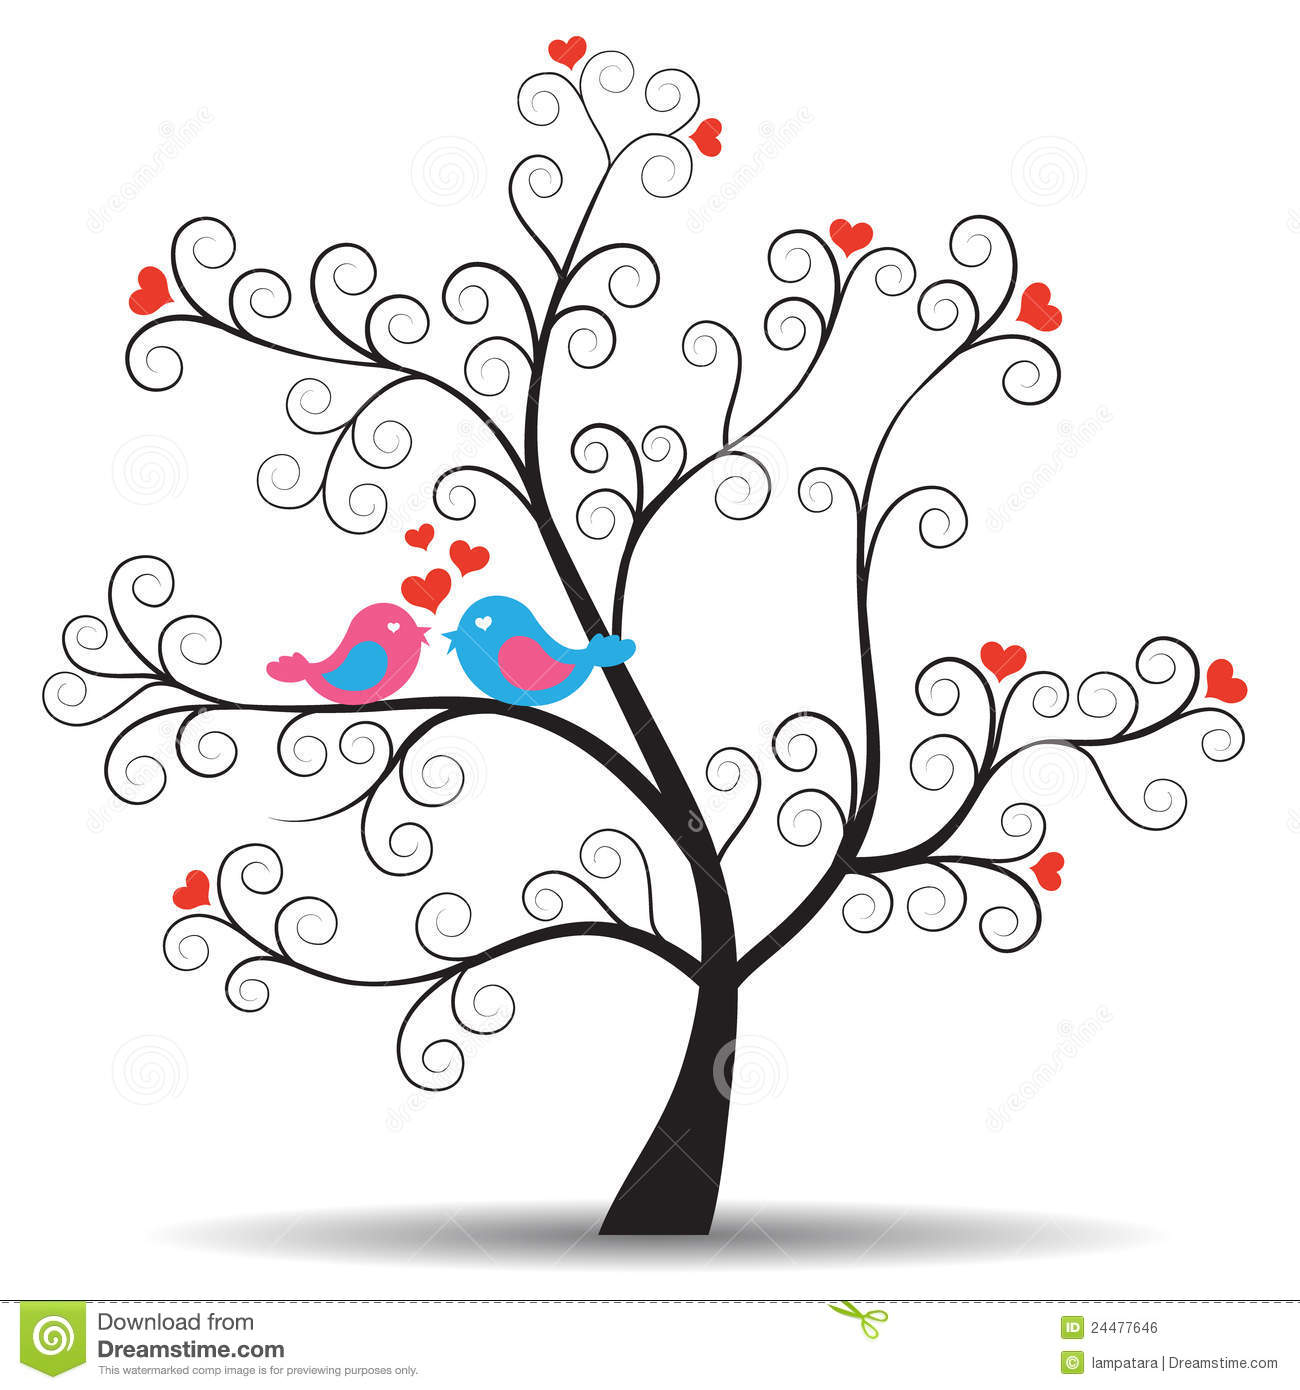 Romantic Tree With Inlove Couple Birds Royalty Free Stock Image